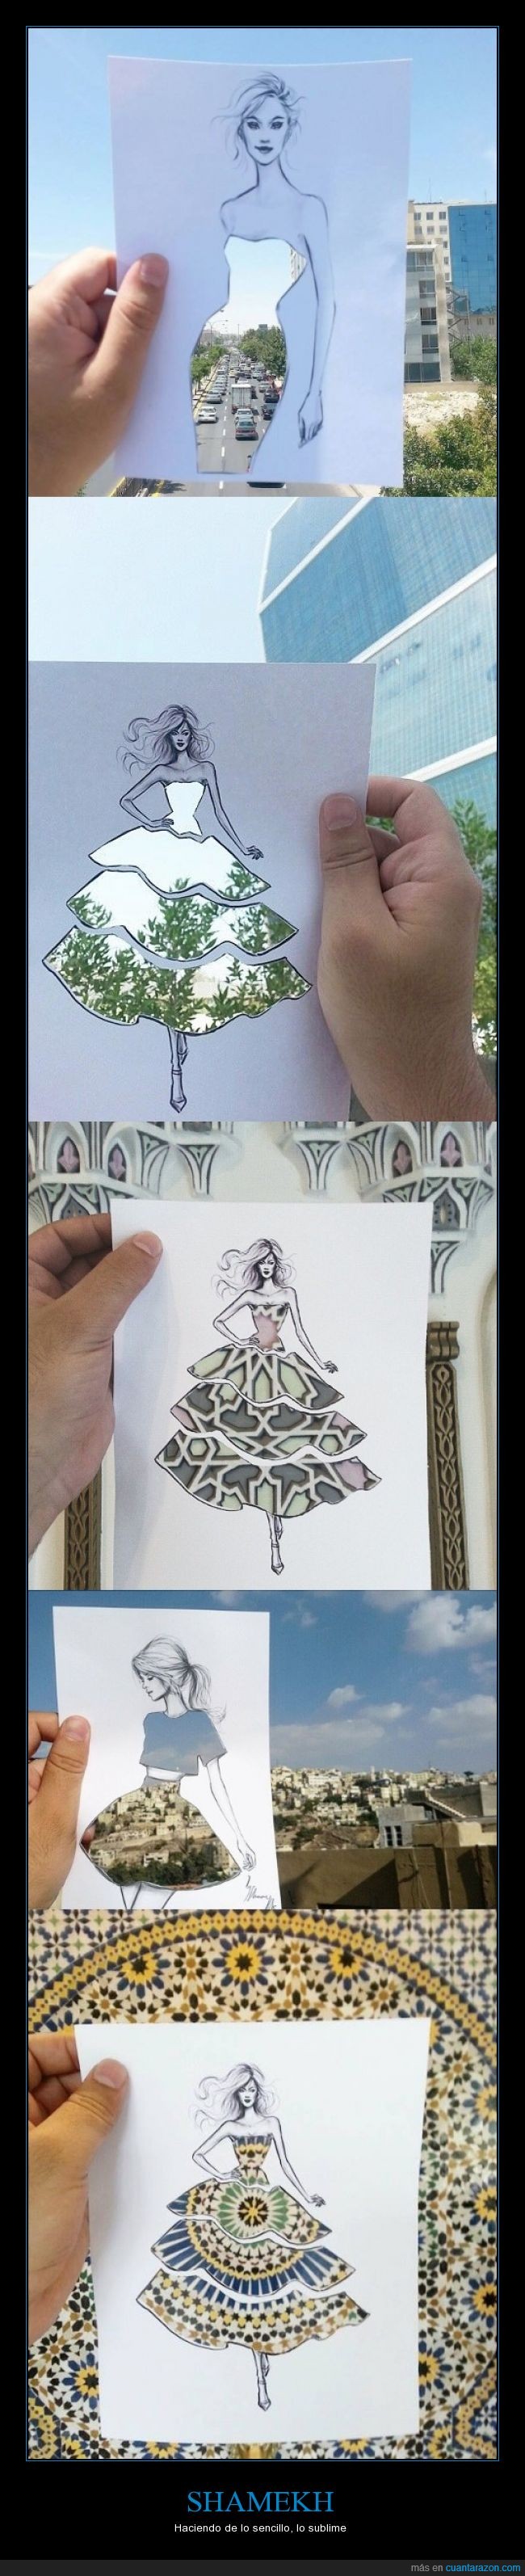 aprovechar,arte,chica,color,dibujo,entorno,estampado,ilustracion,mujer,Shamekh,vestido